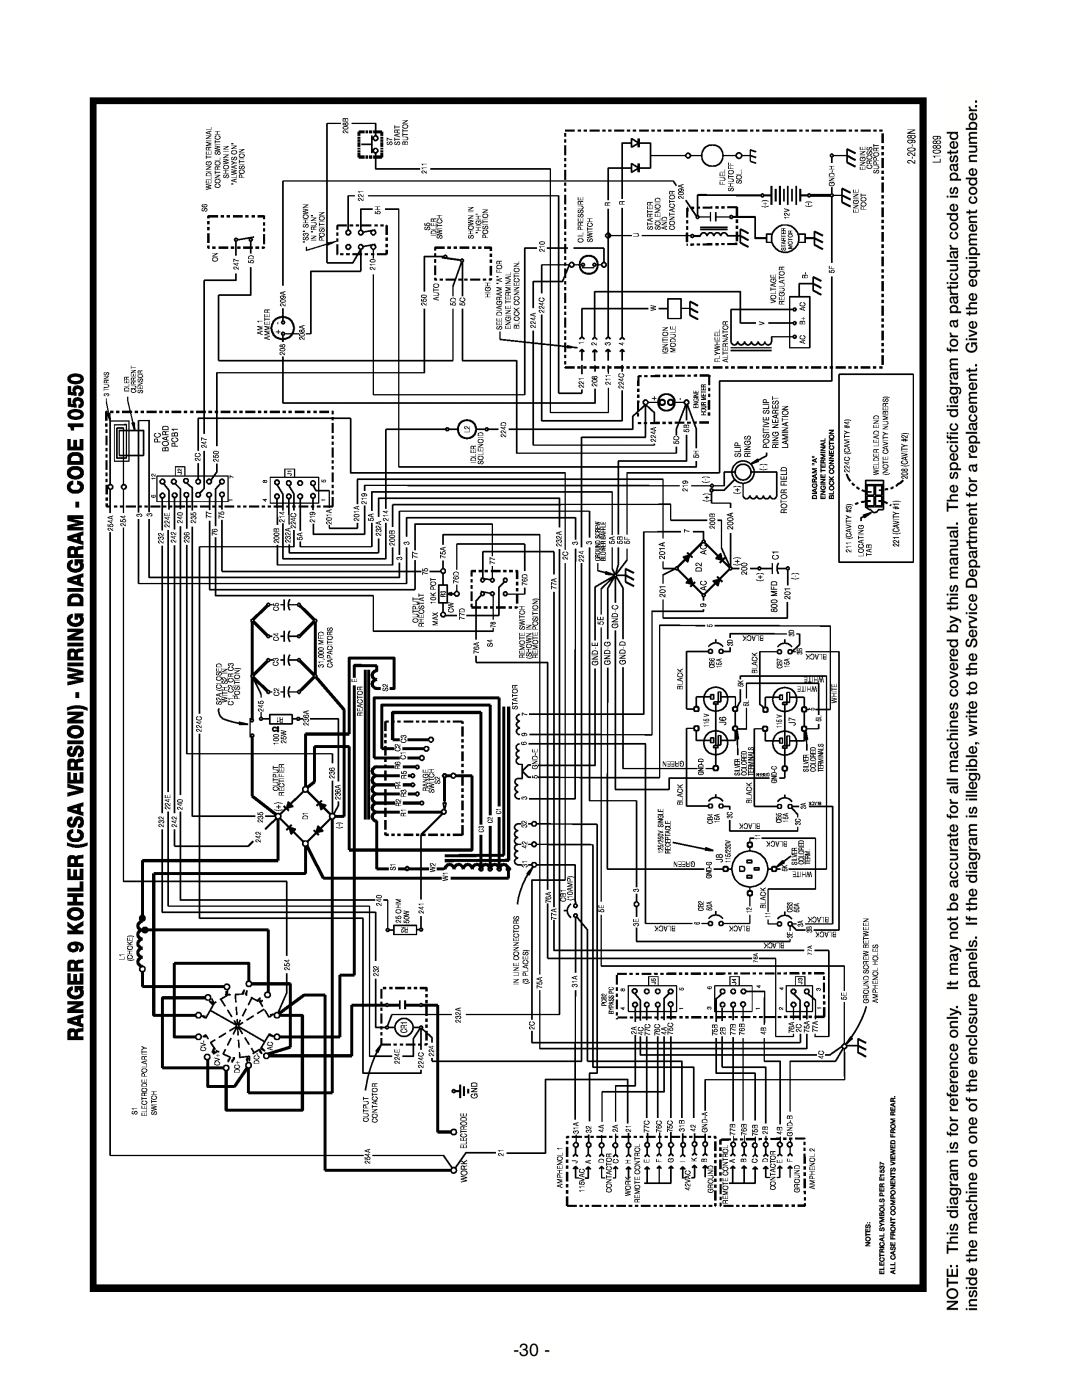 Lincoln Electric IM511-D manual RANGER 9 KOHLER CSA VERSION - WIRING DIAGRAM - CODE, 2-20-98N, L10889 